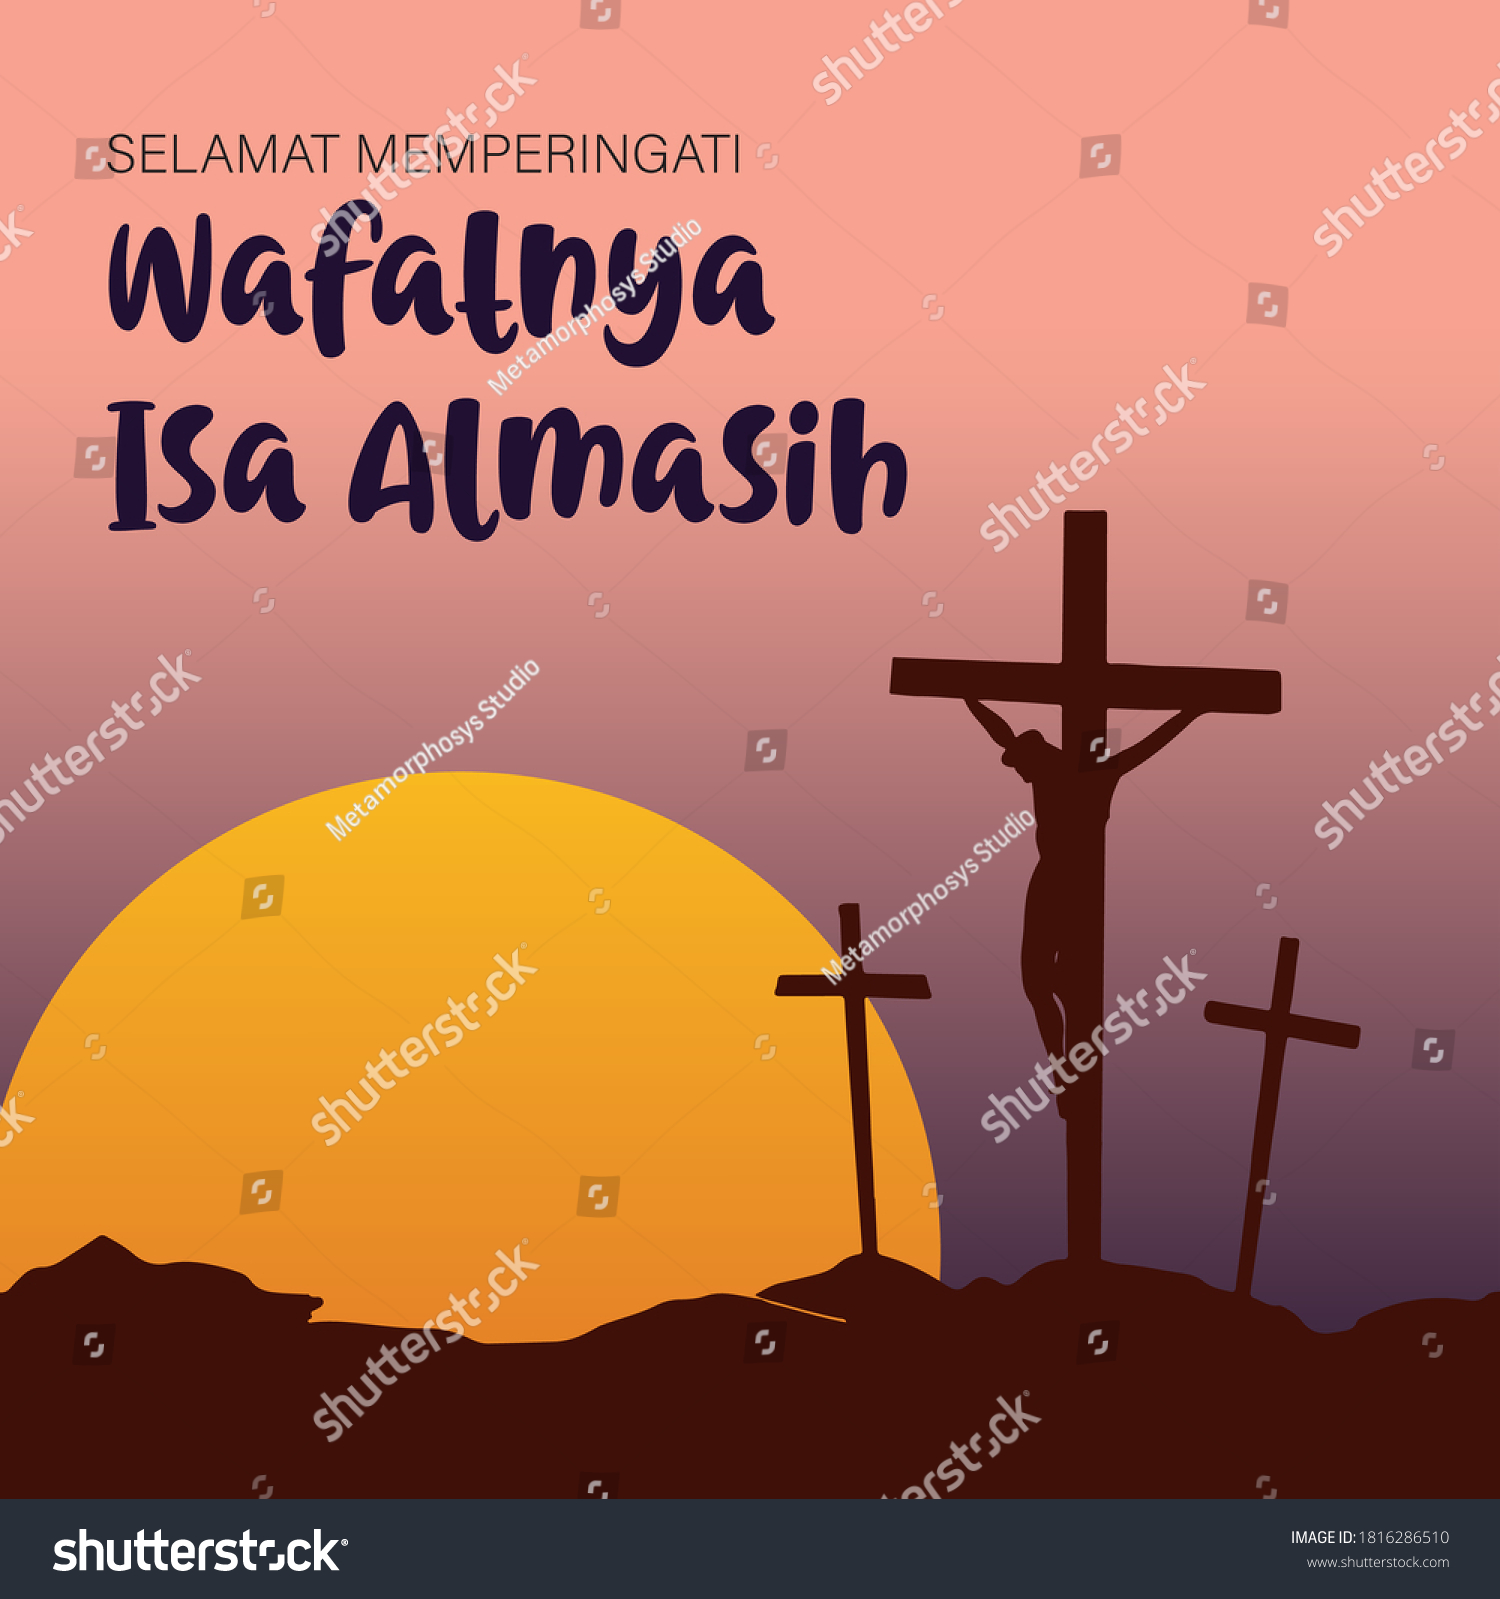 SVG of Memperingati Wafatnya Isa Almasih. Translation: The Ascension Day of Jesus Christ with vector illustration silhouette svg